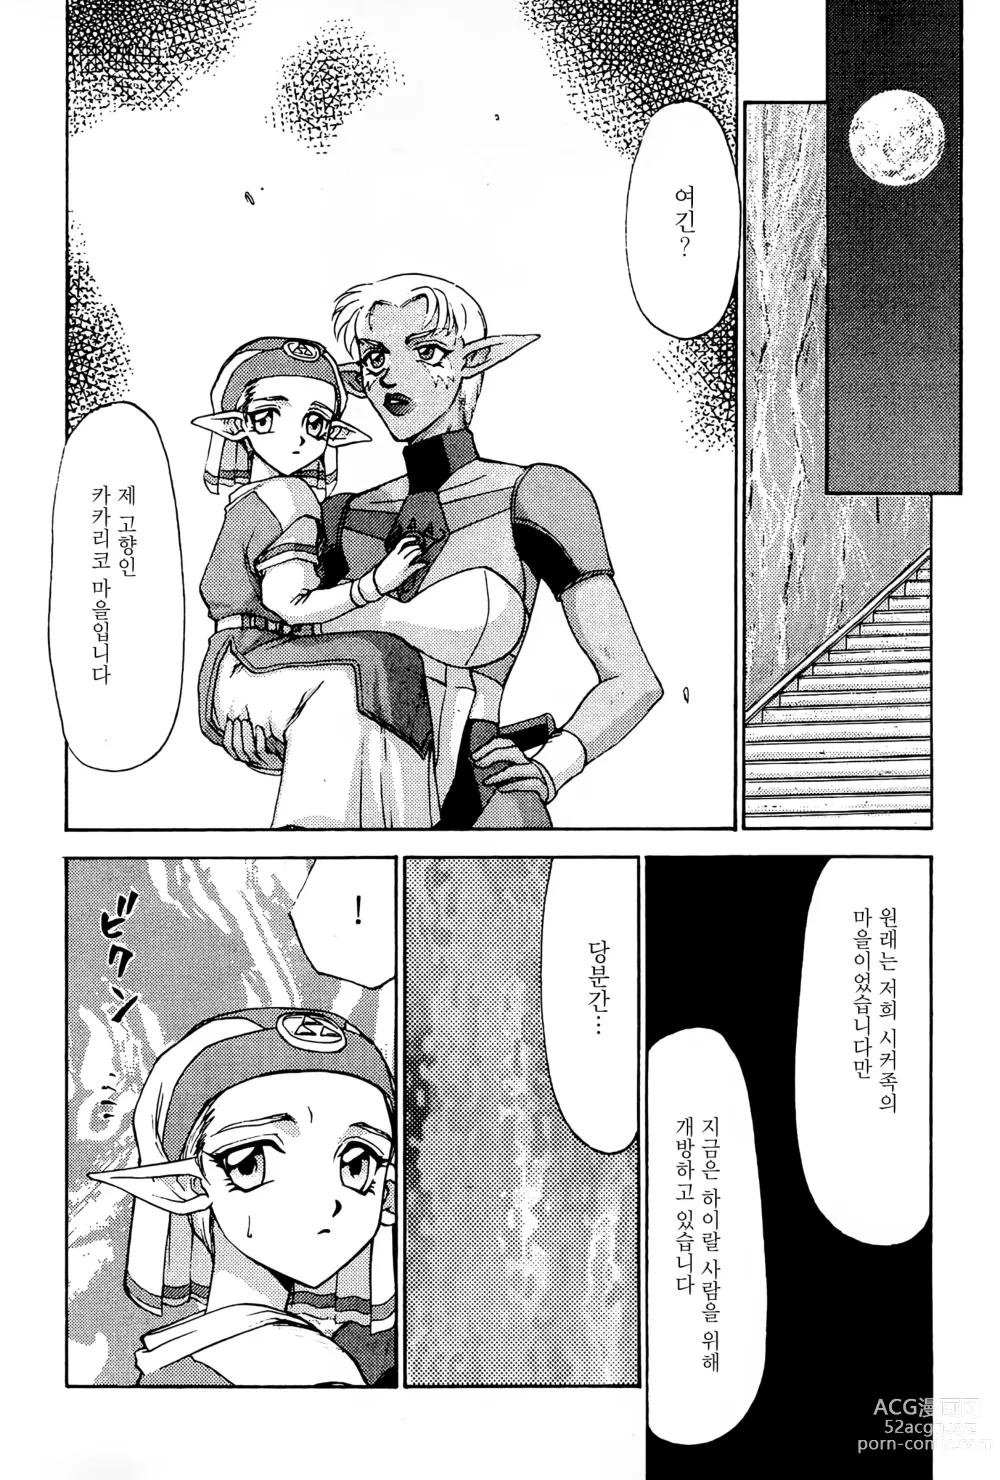 Page 5 of doujinshi NISE Zelda no Densetsu Prologue